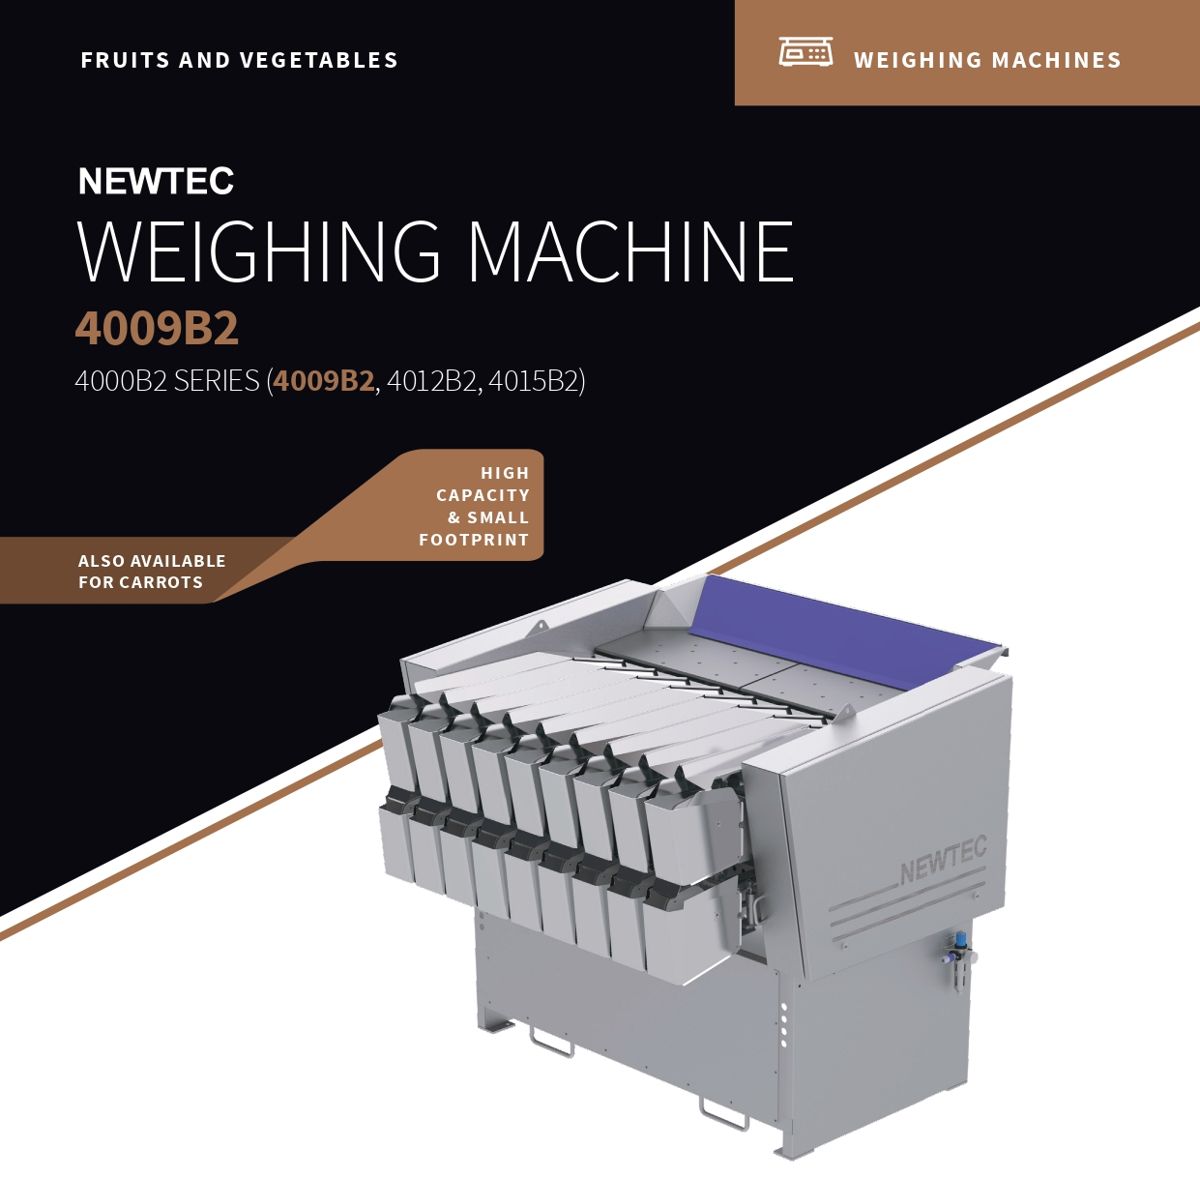 Newtec Weighing Machine 4009B2 Brochure